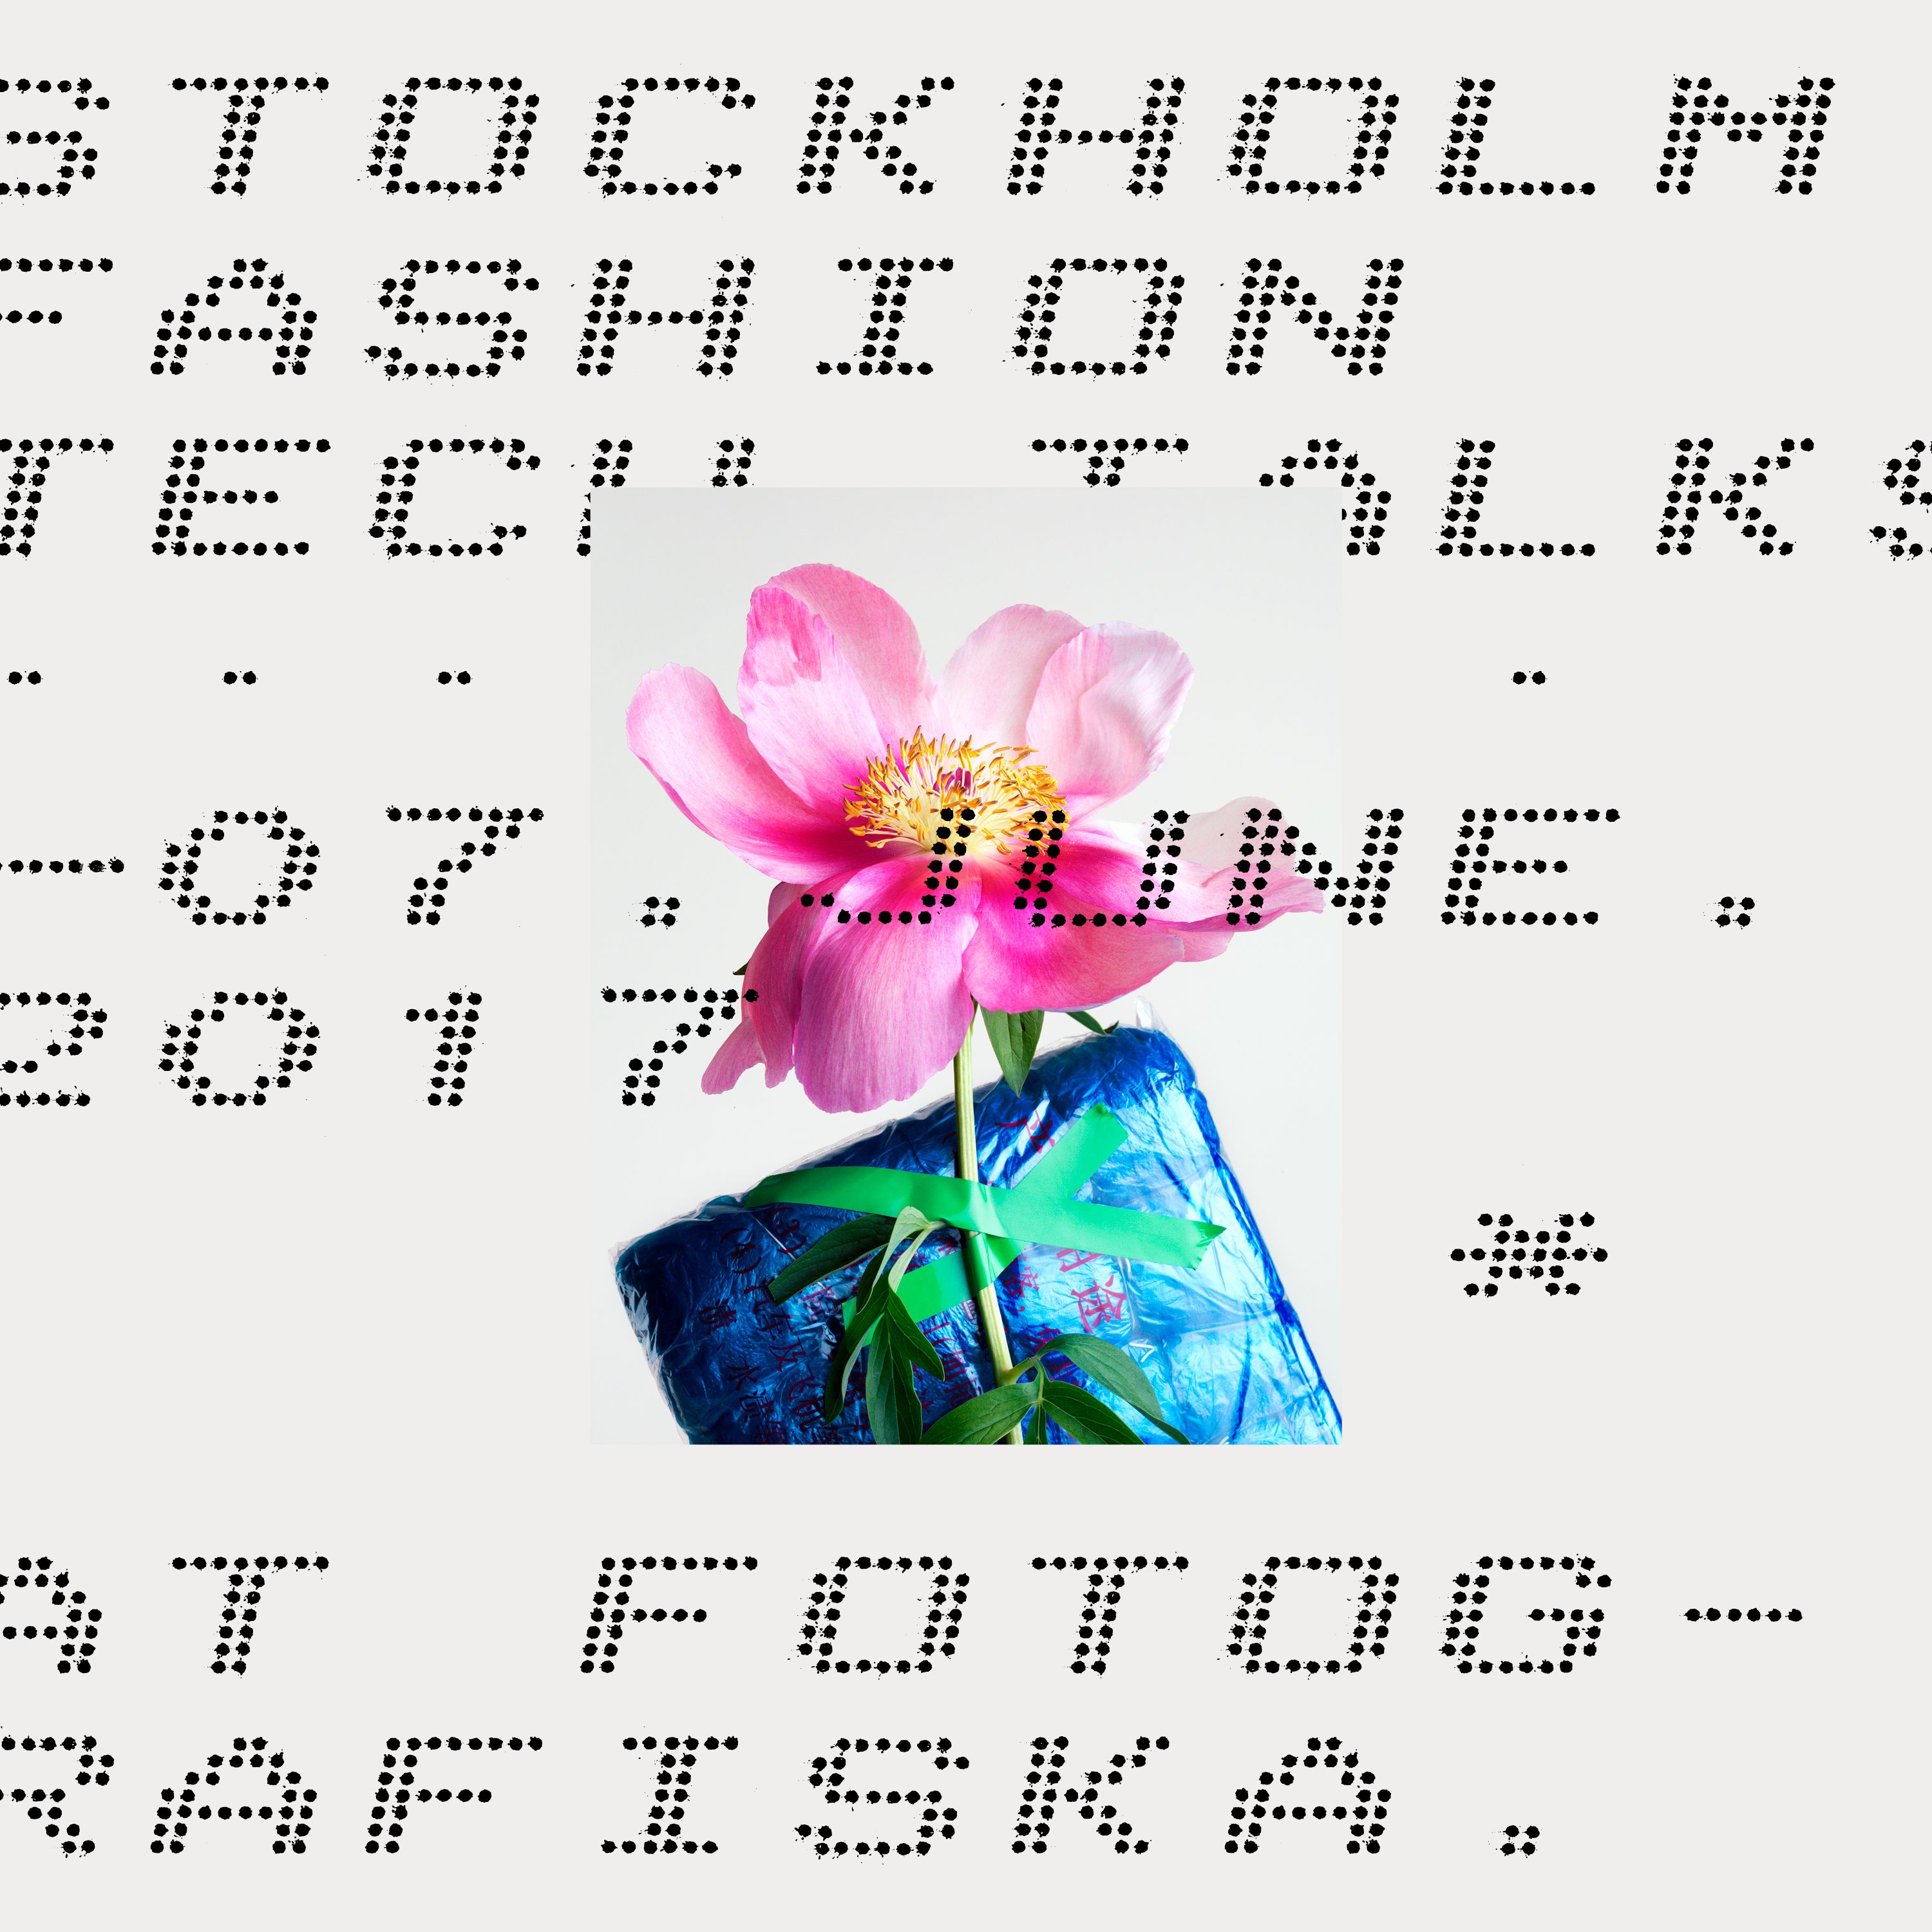 cover art for Jonas Larsson, Swedish School of Textiles: Digital tools towards positive impact